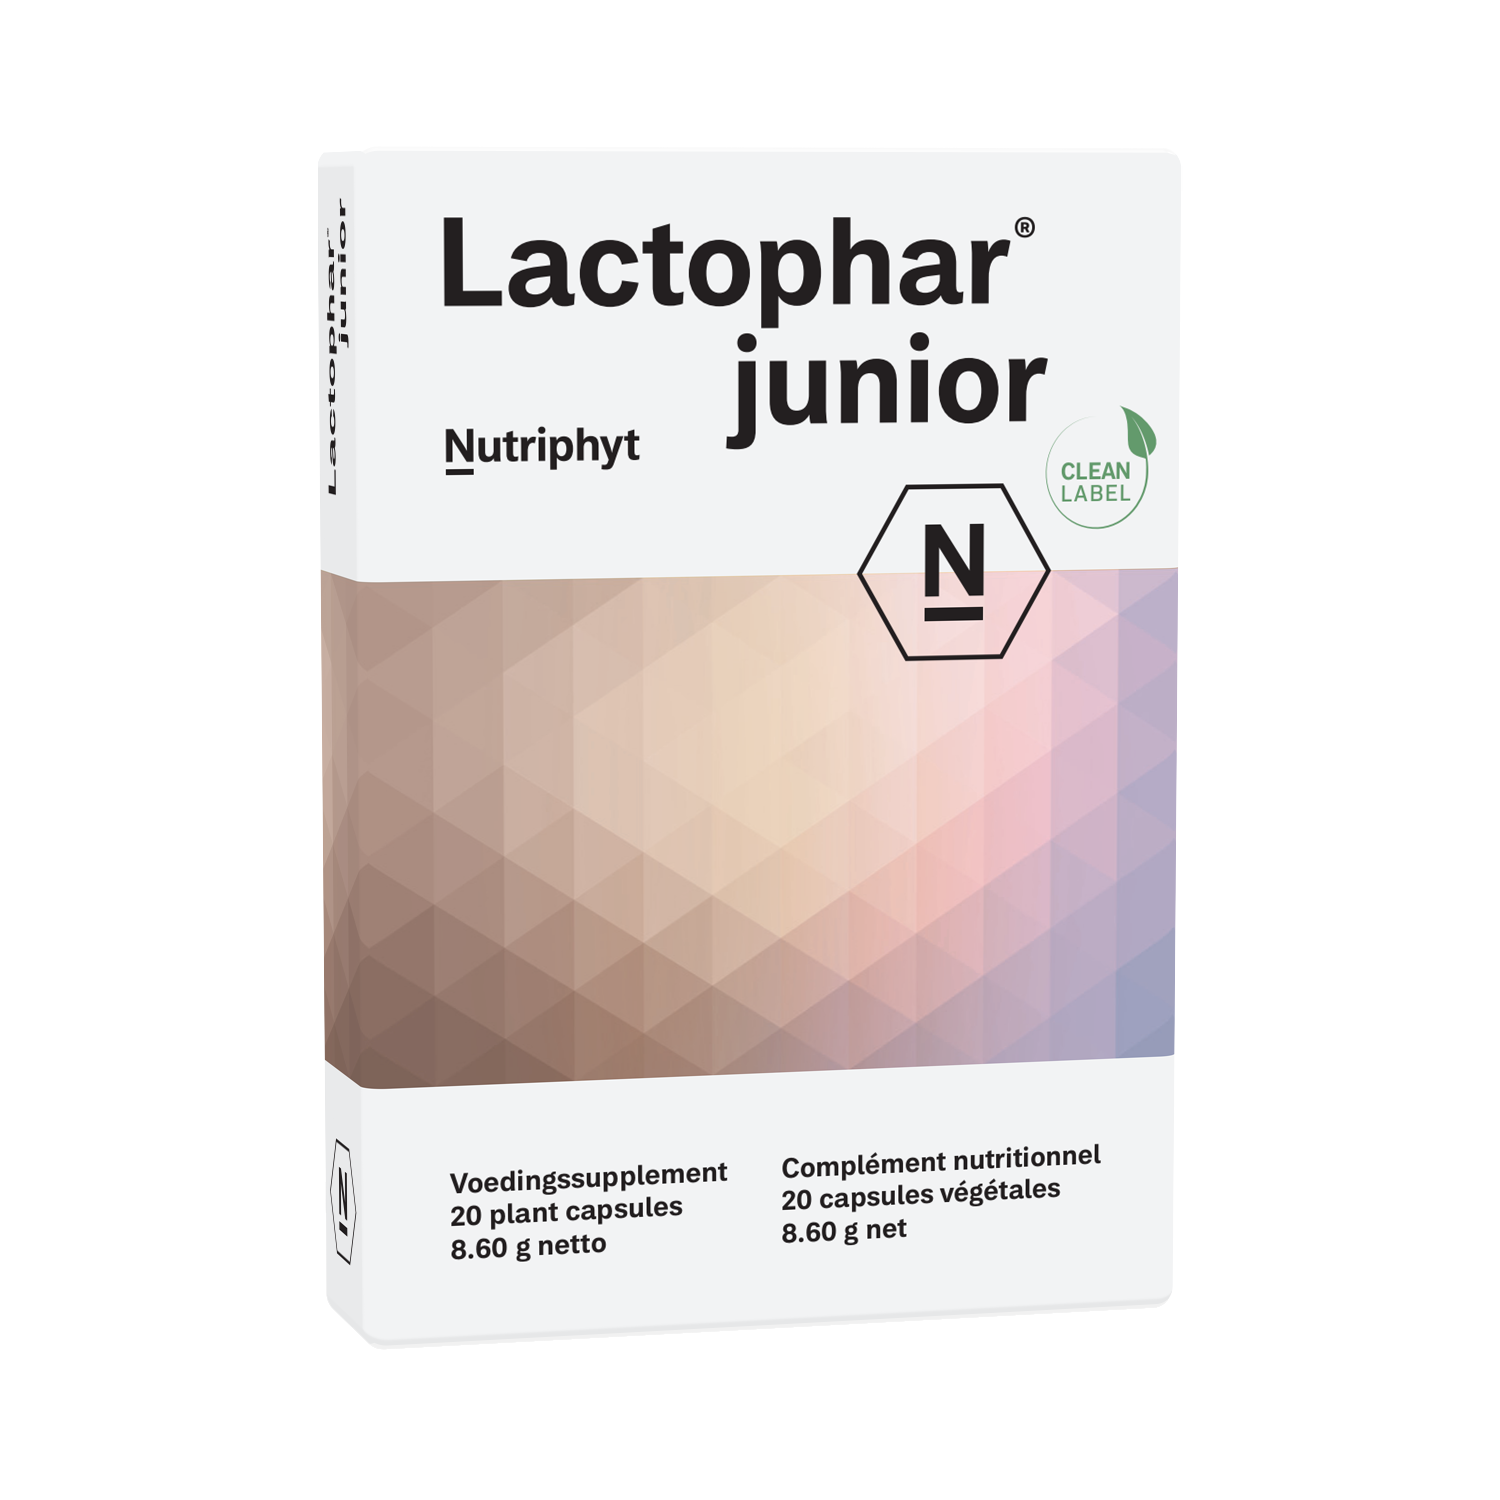 Lactophar junior